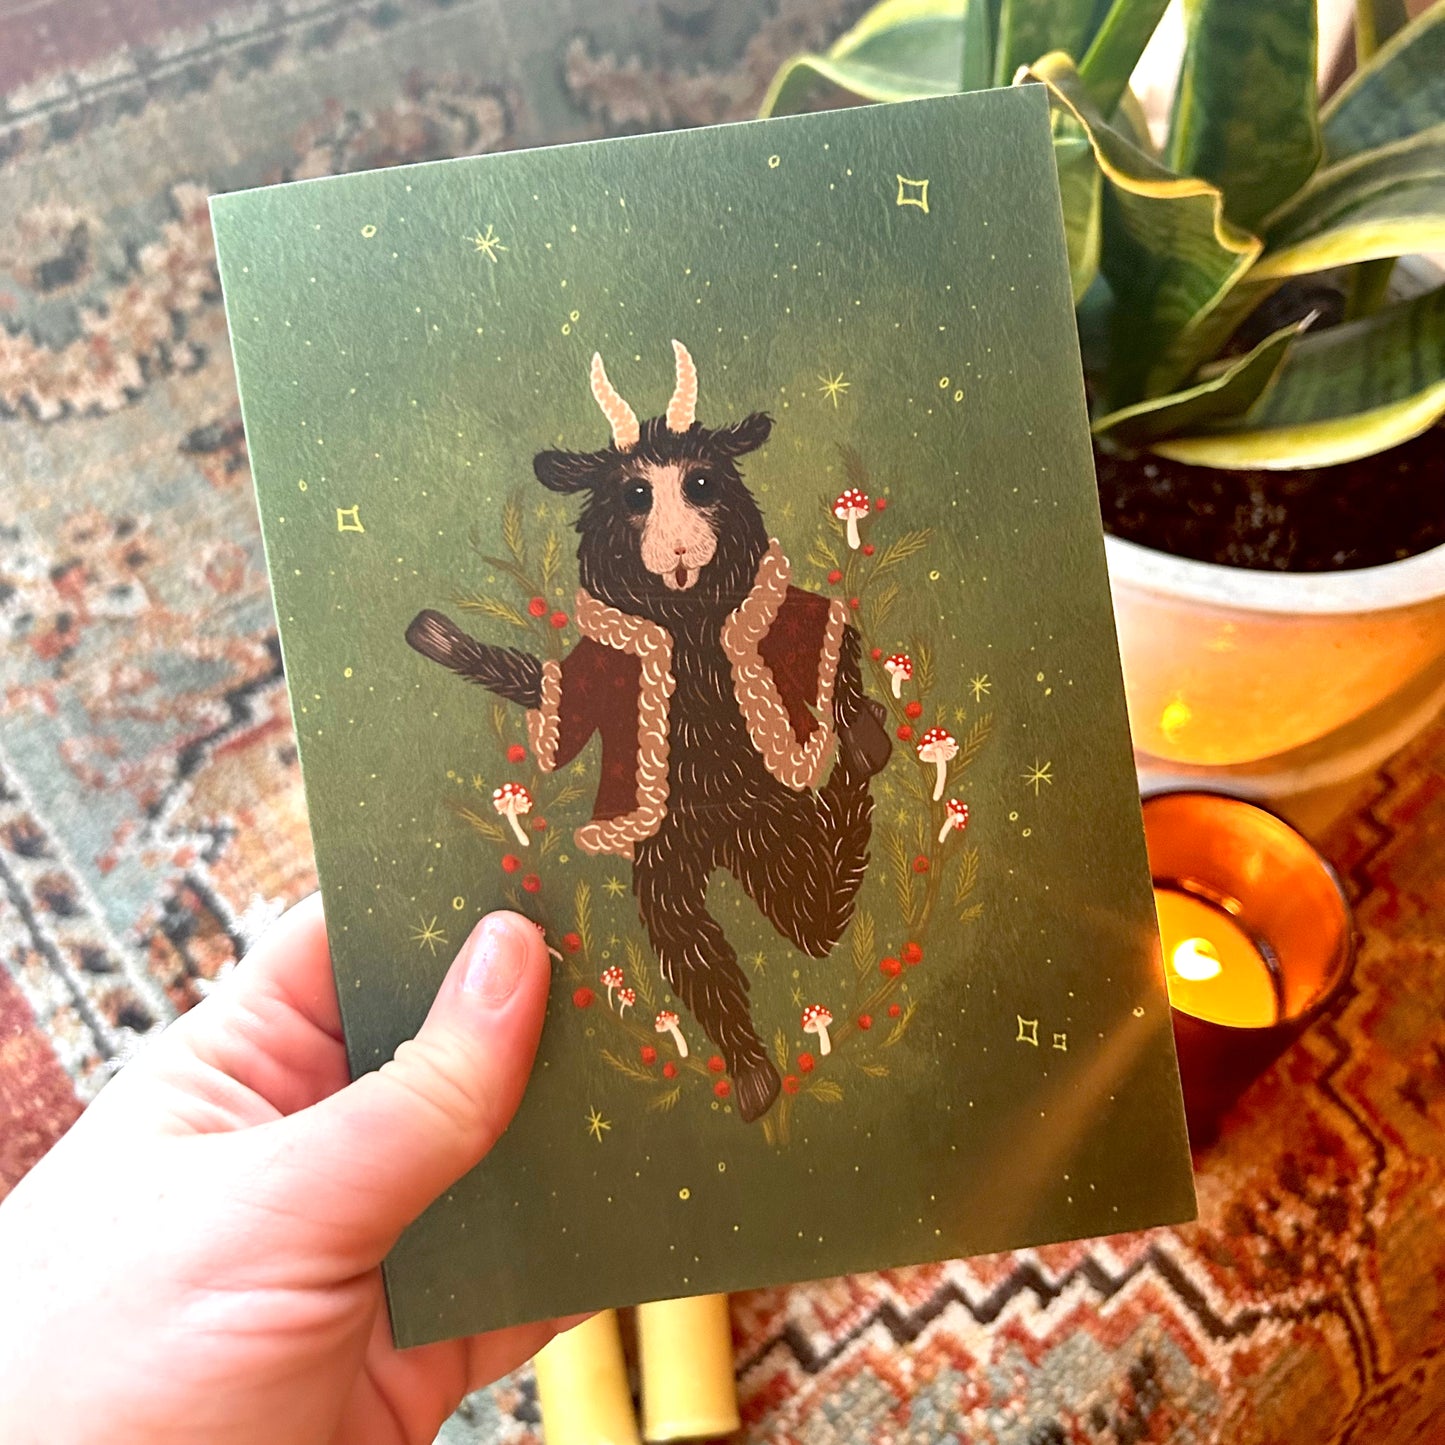 Cheerful Krampus Christmas Card - A Delightfully Dark Twist!